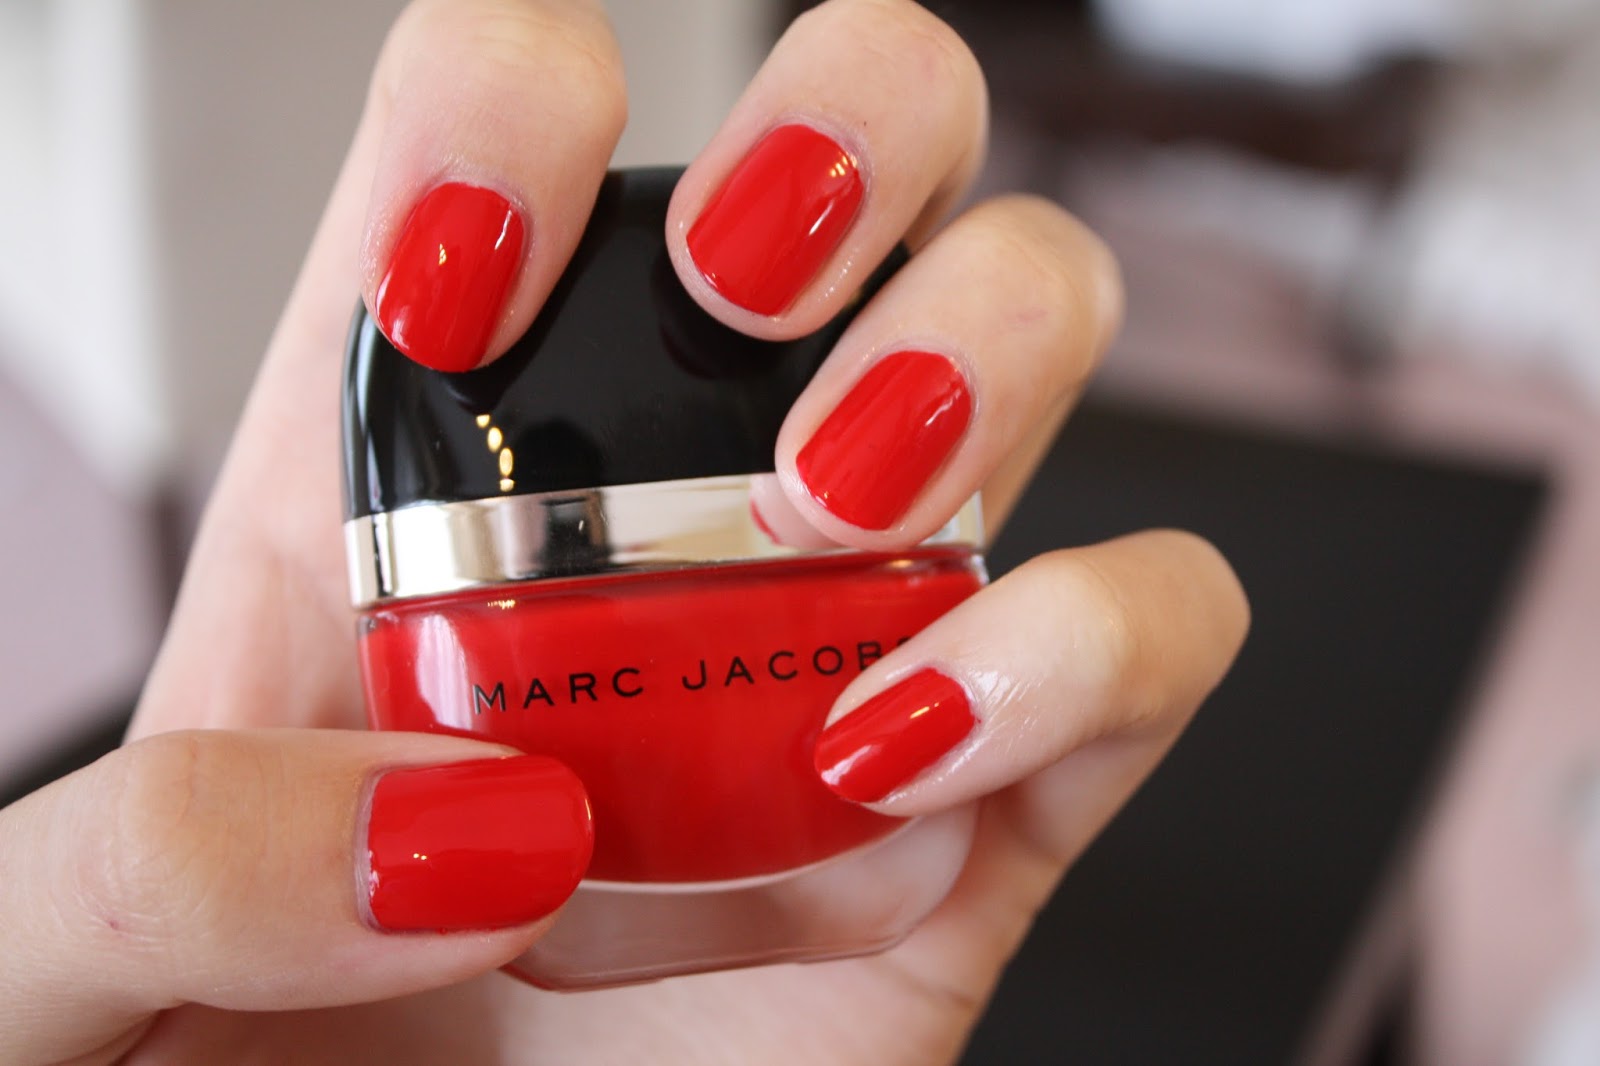 2. Marc Jacobs Beauty Enamored Hi-Shine Nail Polish in "Gatsby" - wide 8